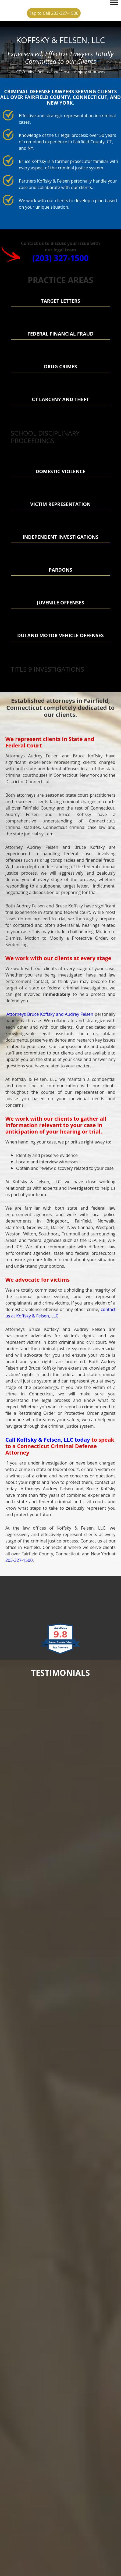 Koffsky & Felsen, LLC - Stamford CT Lawyers